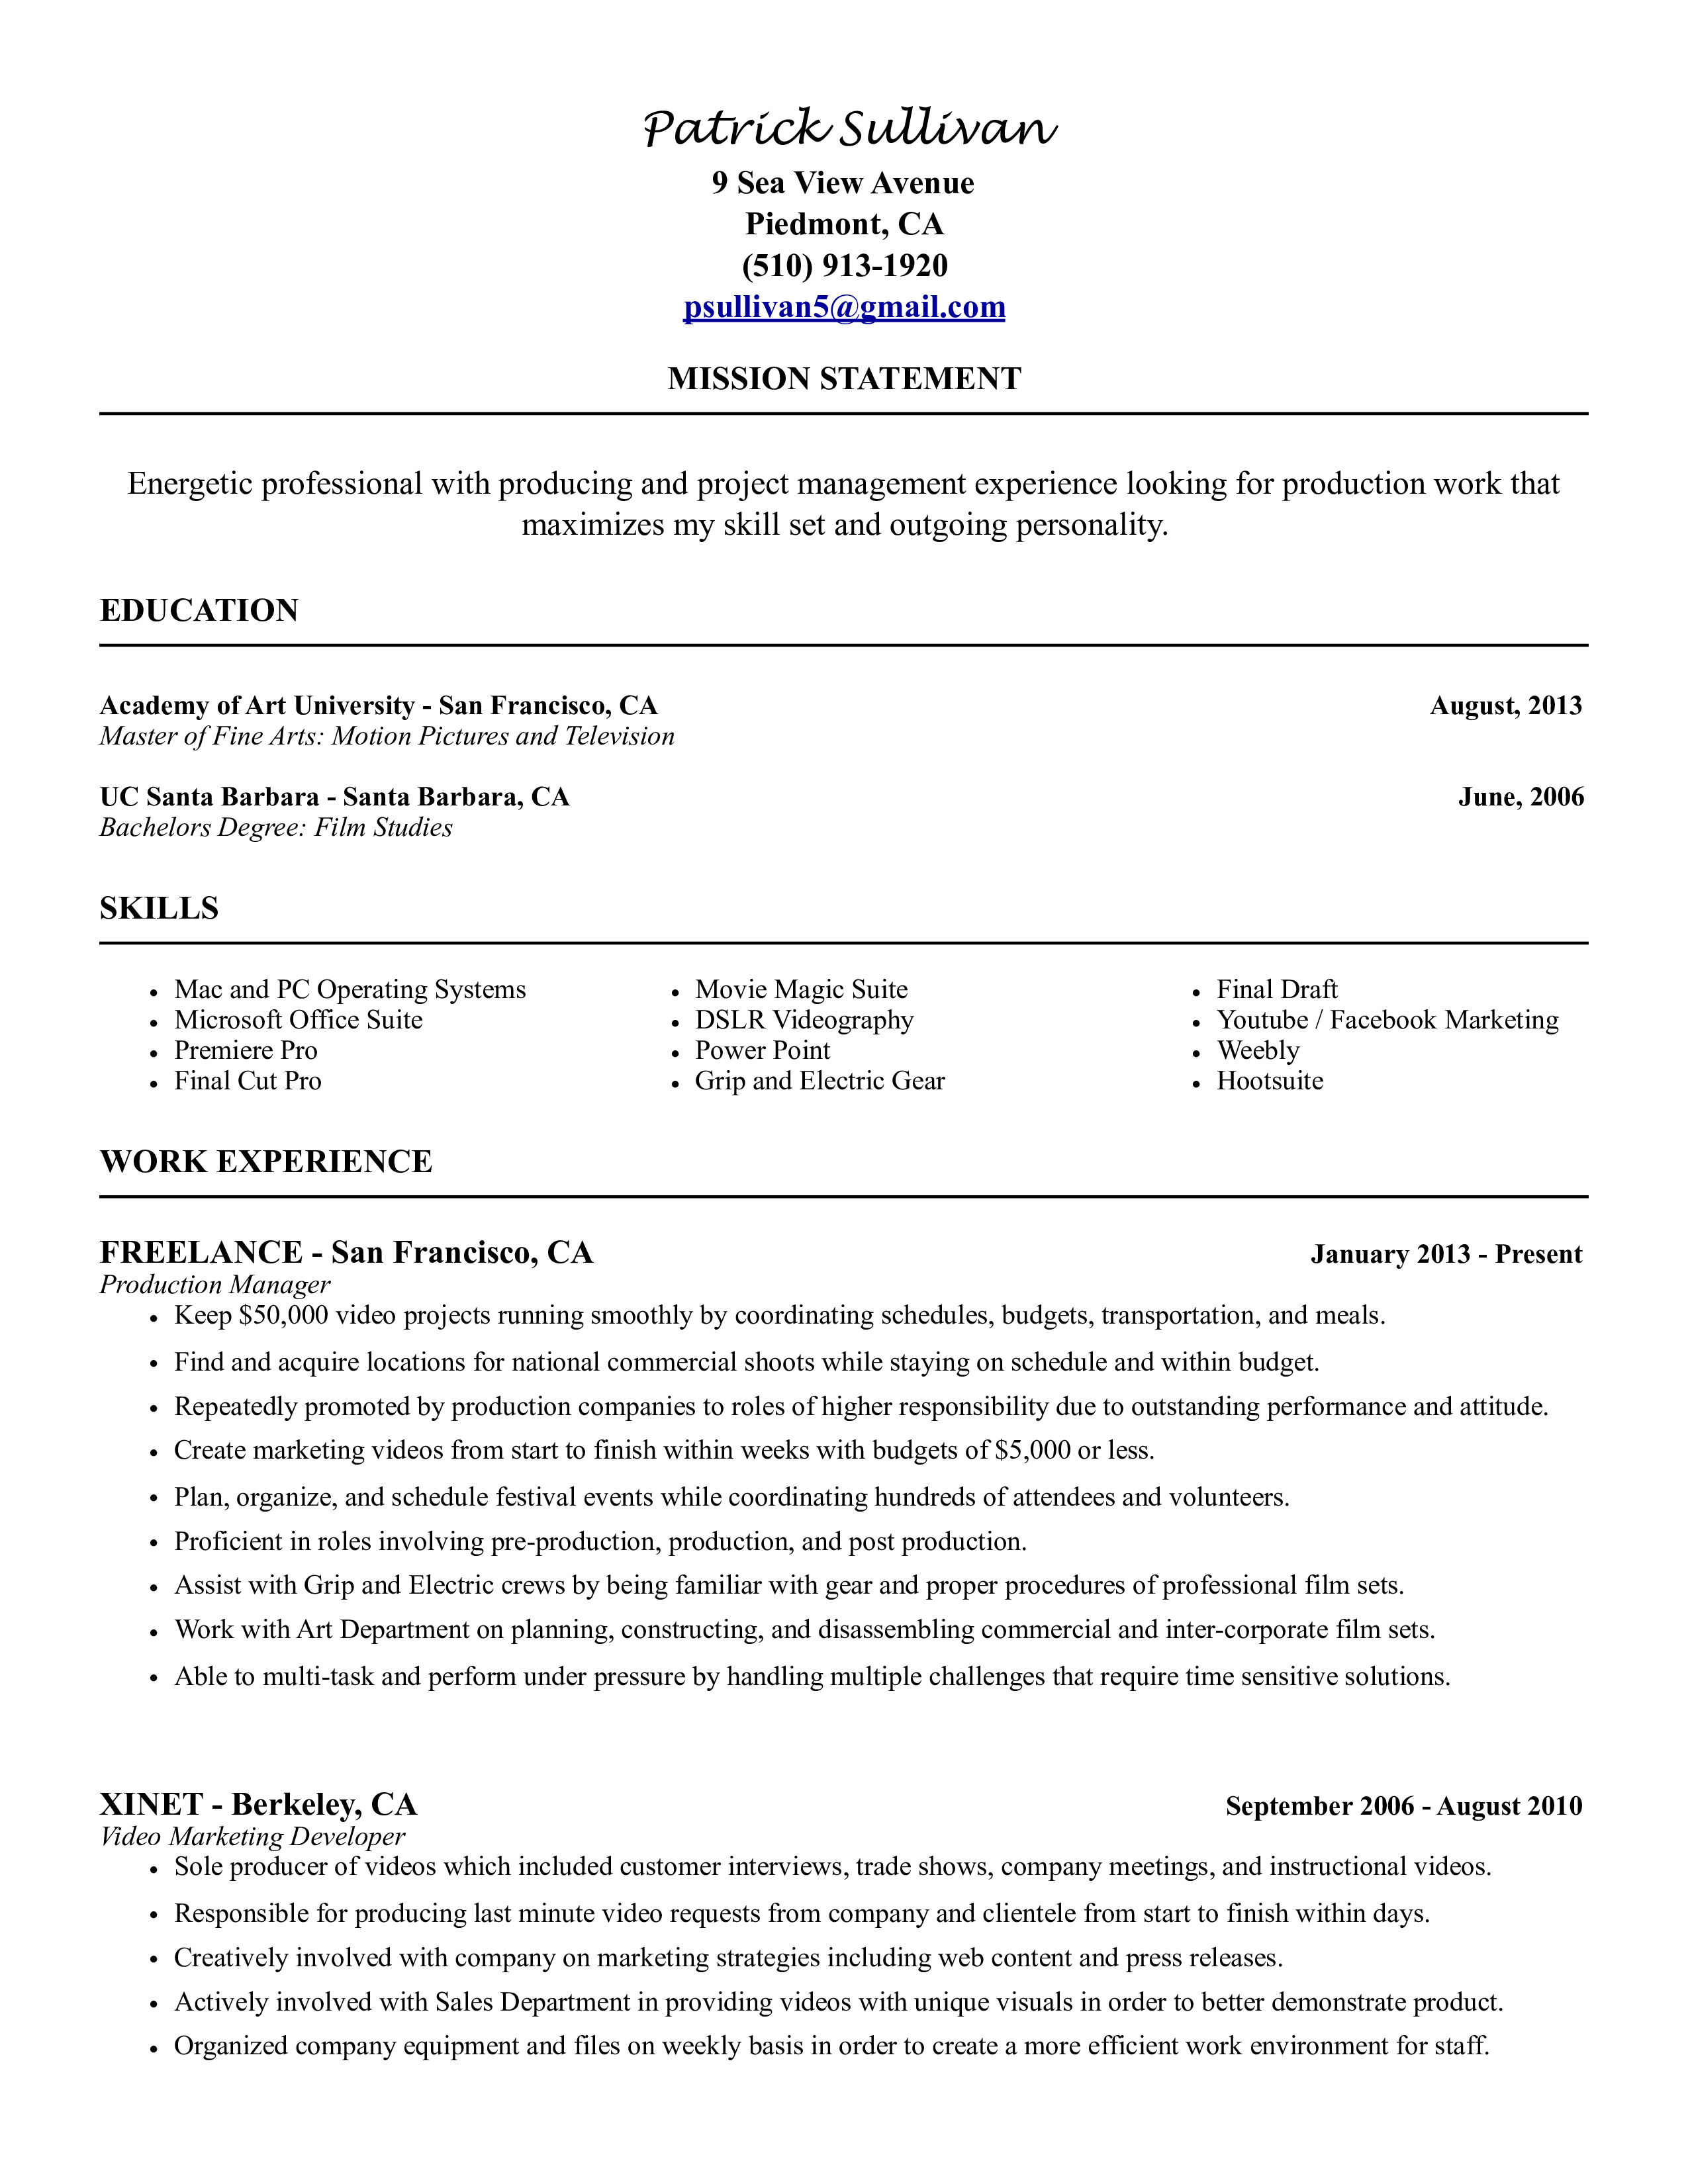 Sample Resume | Templates at allbusinesstemplates.com